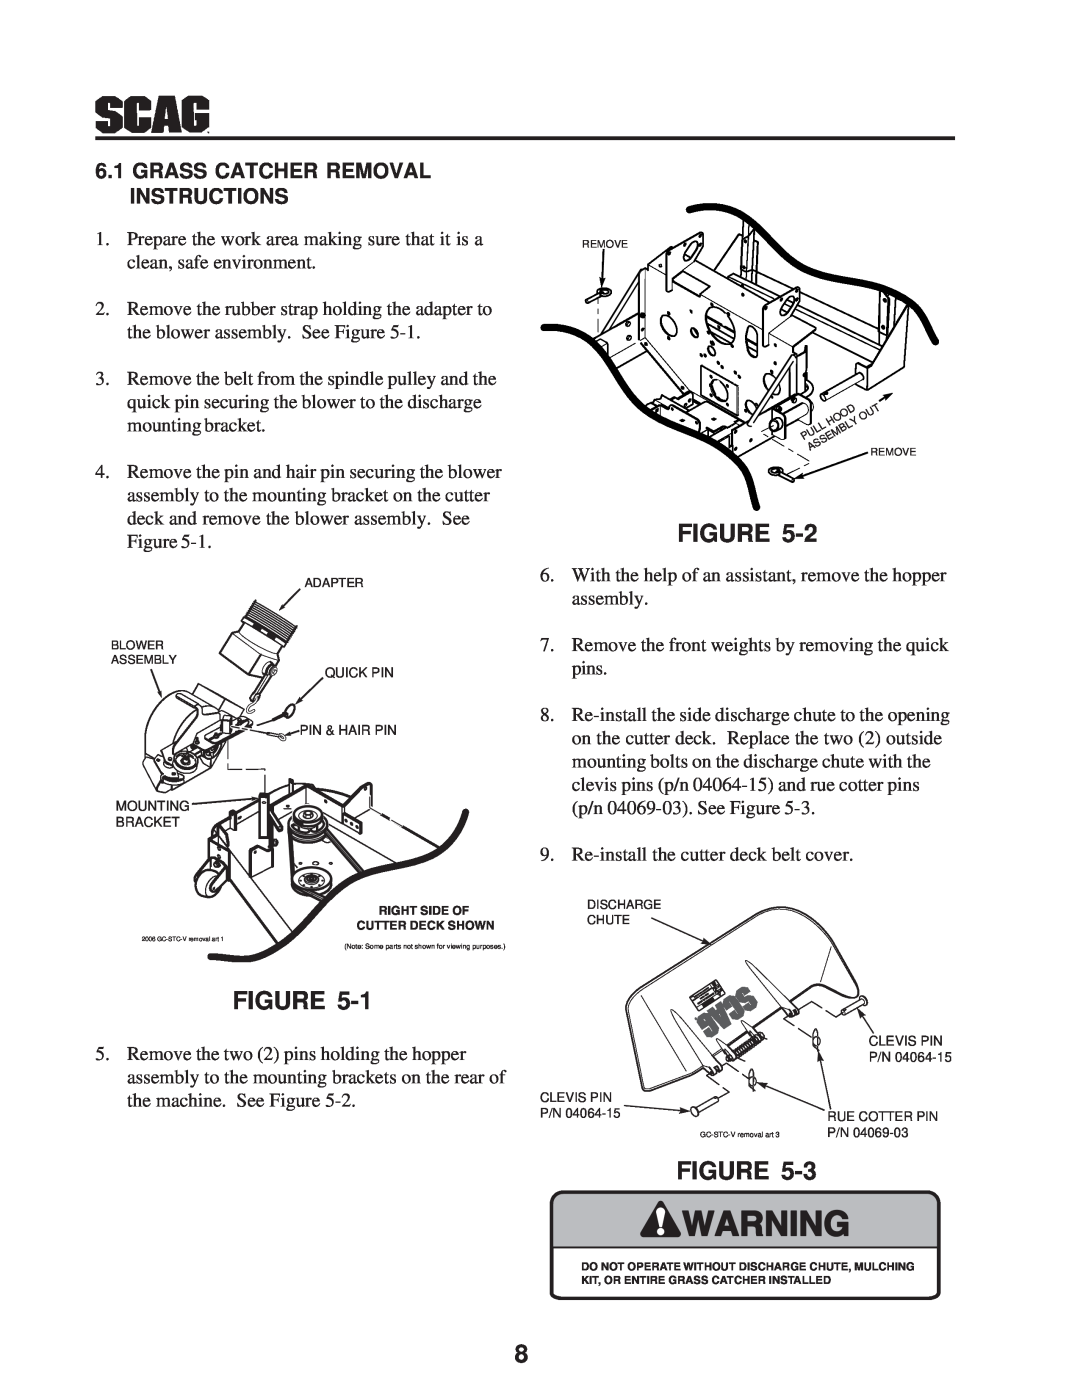 Scag Power Equipment GC-STT-CSV manual Grass Catcher Removal Instructions 